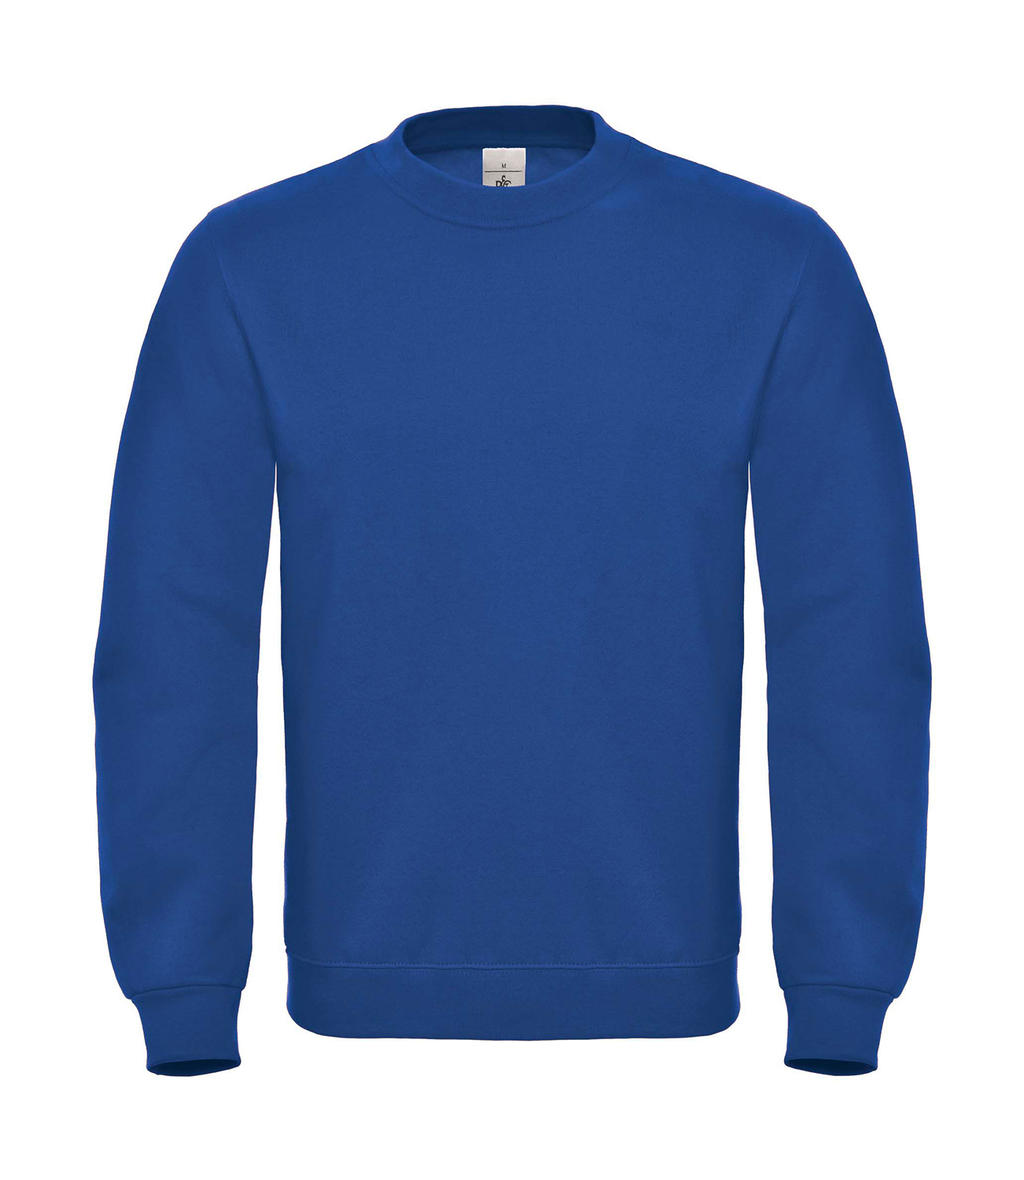  ID.002 Cotton Rich Sweatshirt  in Farbe Royal